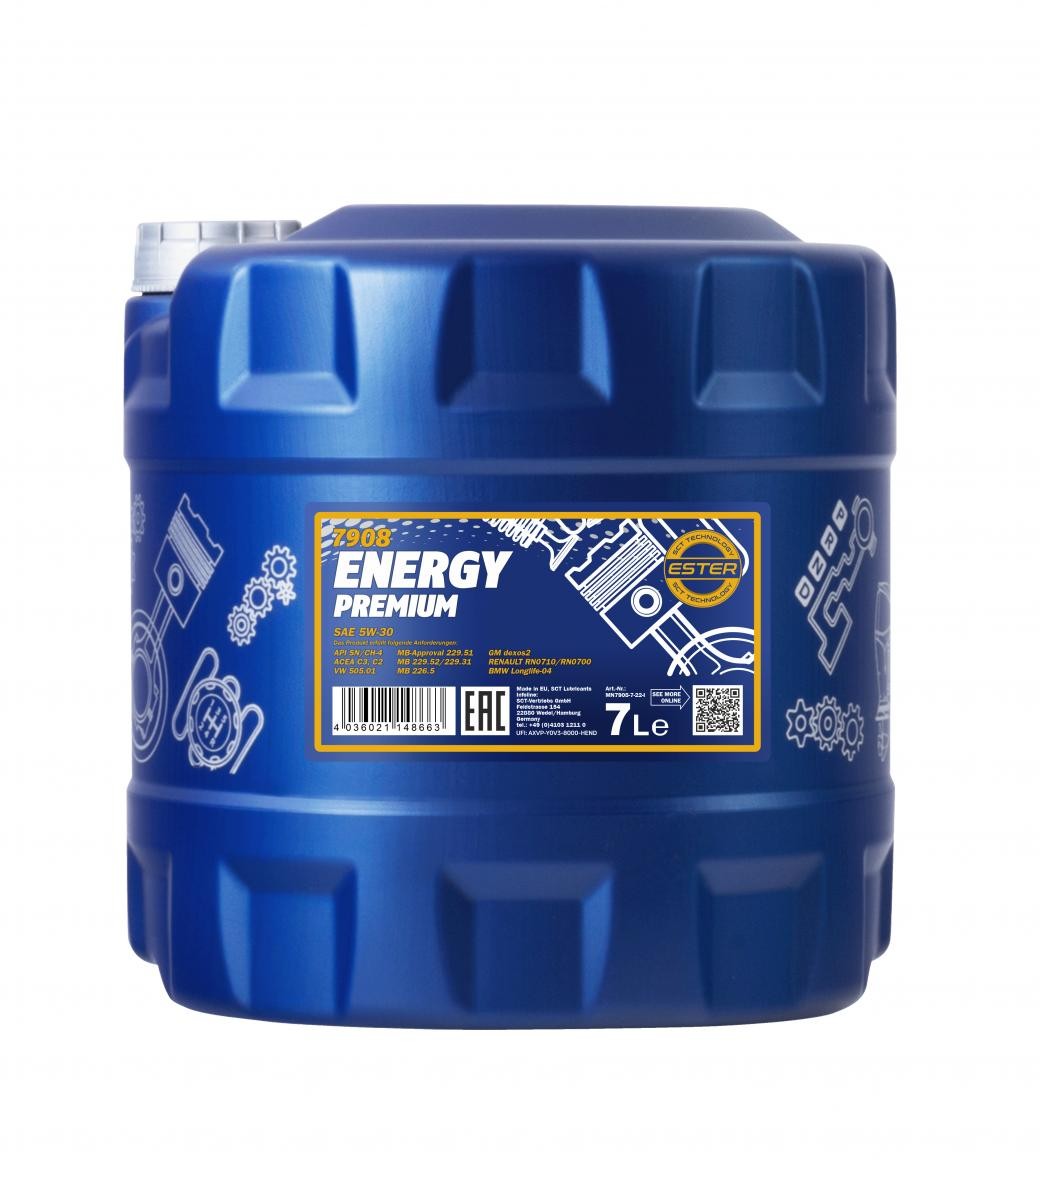 MN7908-7 MANNOL ENERGY PREMIUM 5W-30, 7l, Synthetiköl Motoröl MN7908-7 günstig kaufen